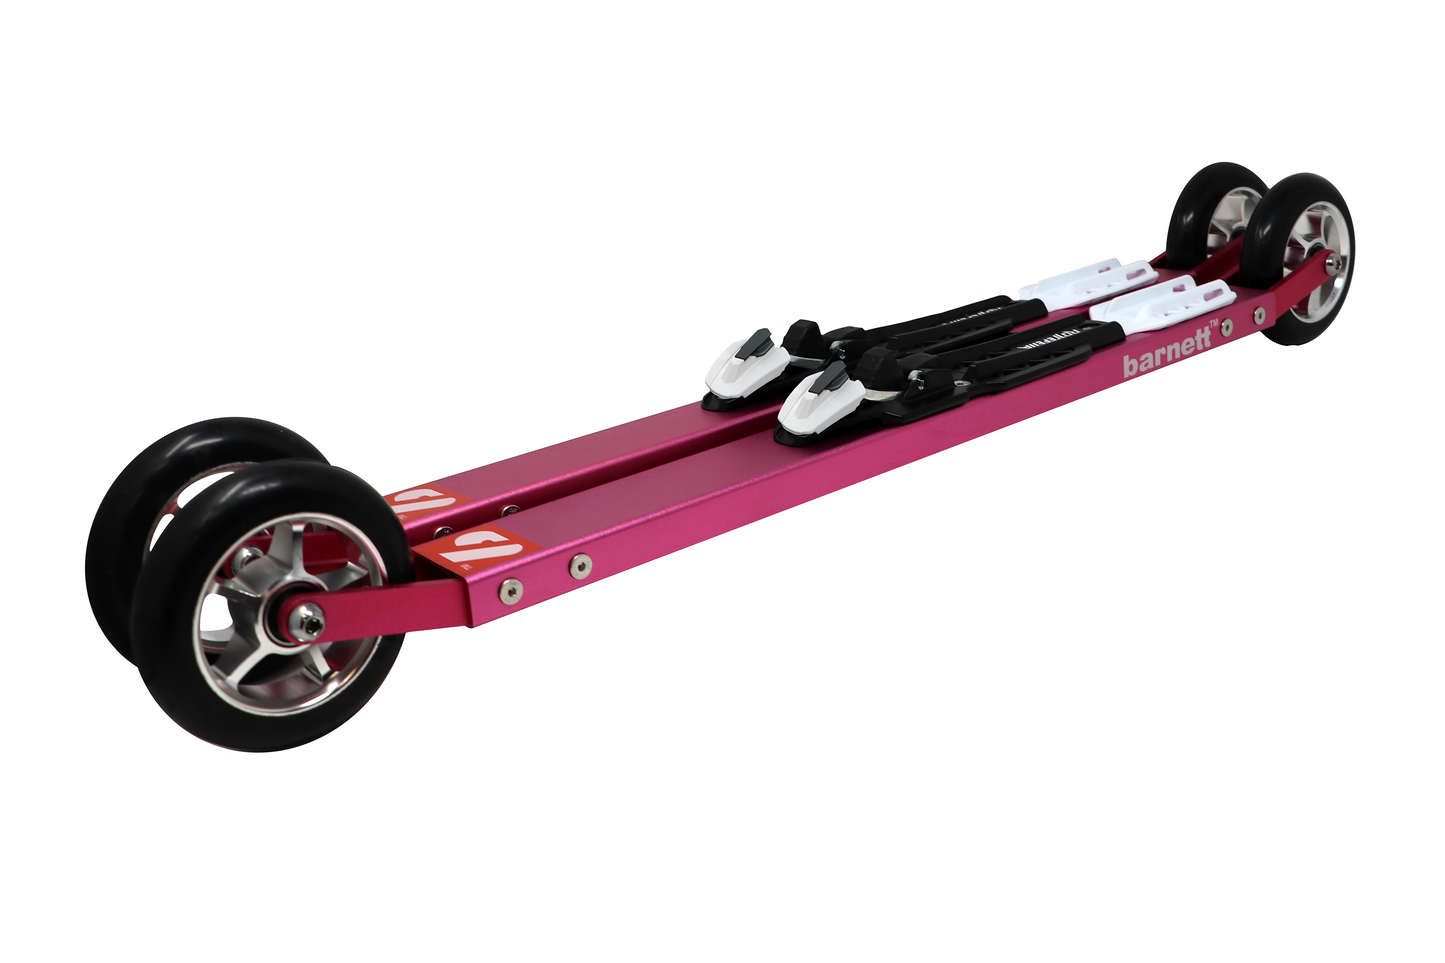 RSE-610 Bindings NNN Roller ski, PINK